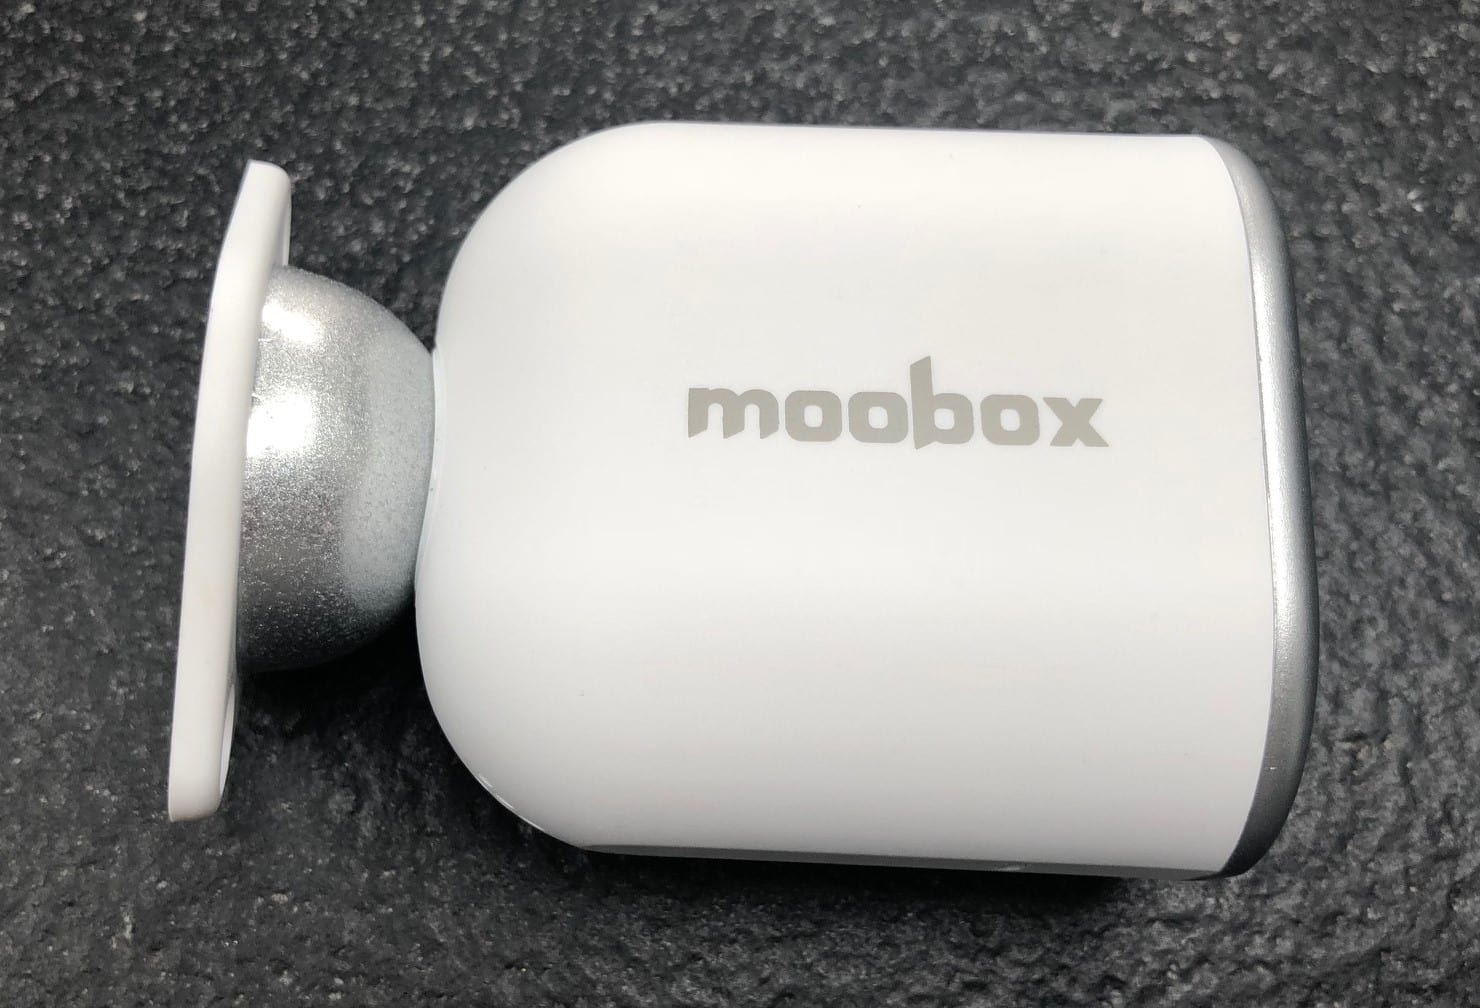 Moobox camera review